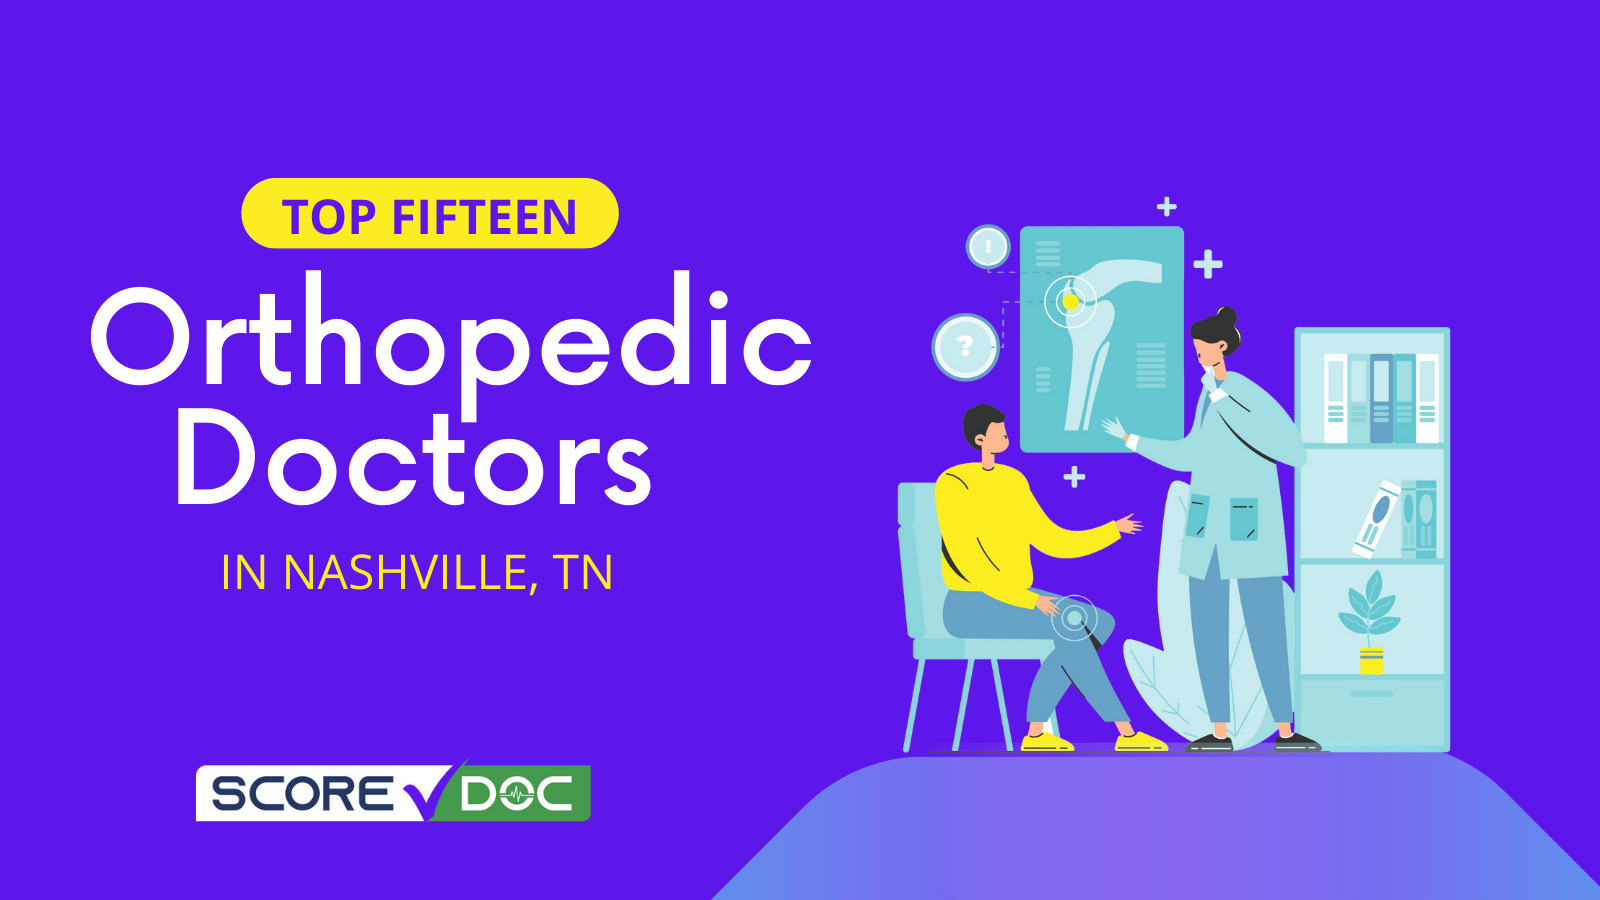 Top 15 Orthopedic Doctors in Nashville, TN